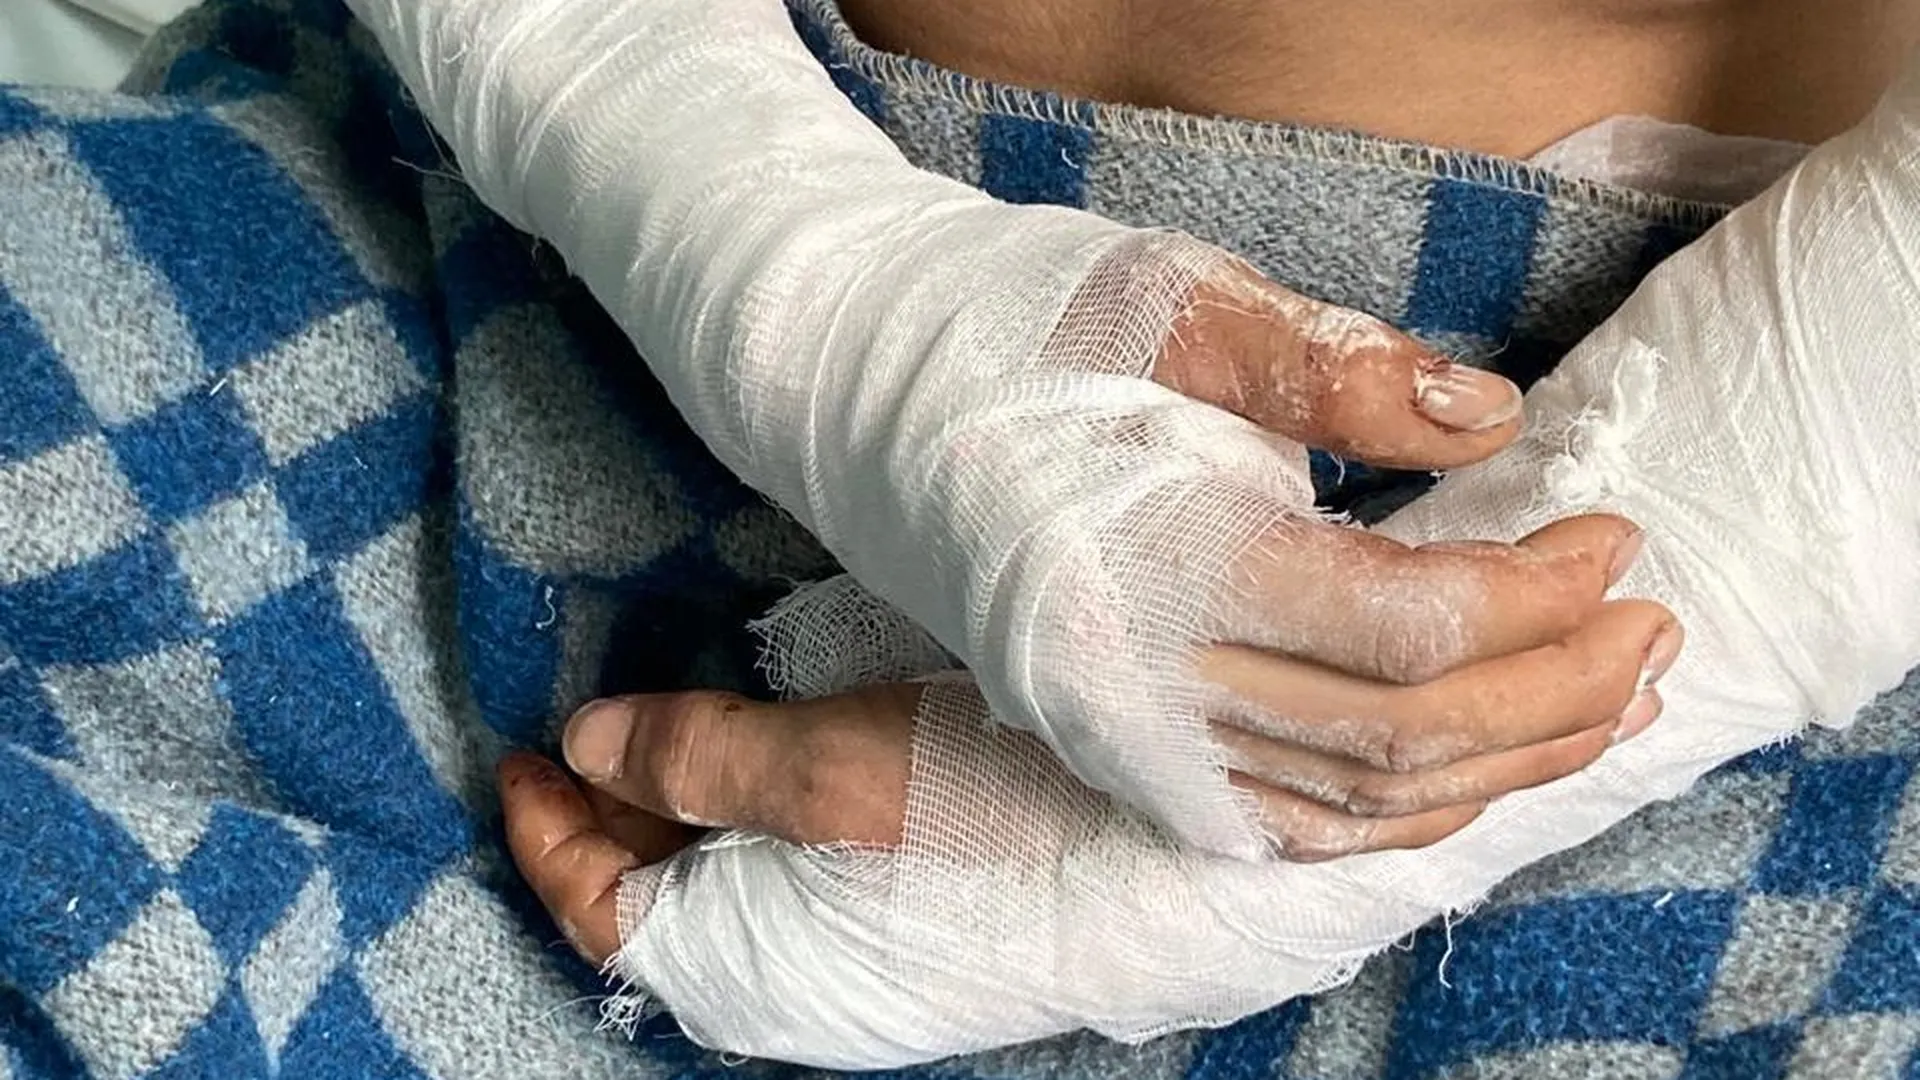 Солнечногорские хирурги пришили мужчине обе руки, отрезанные стеклом